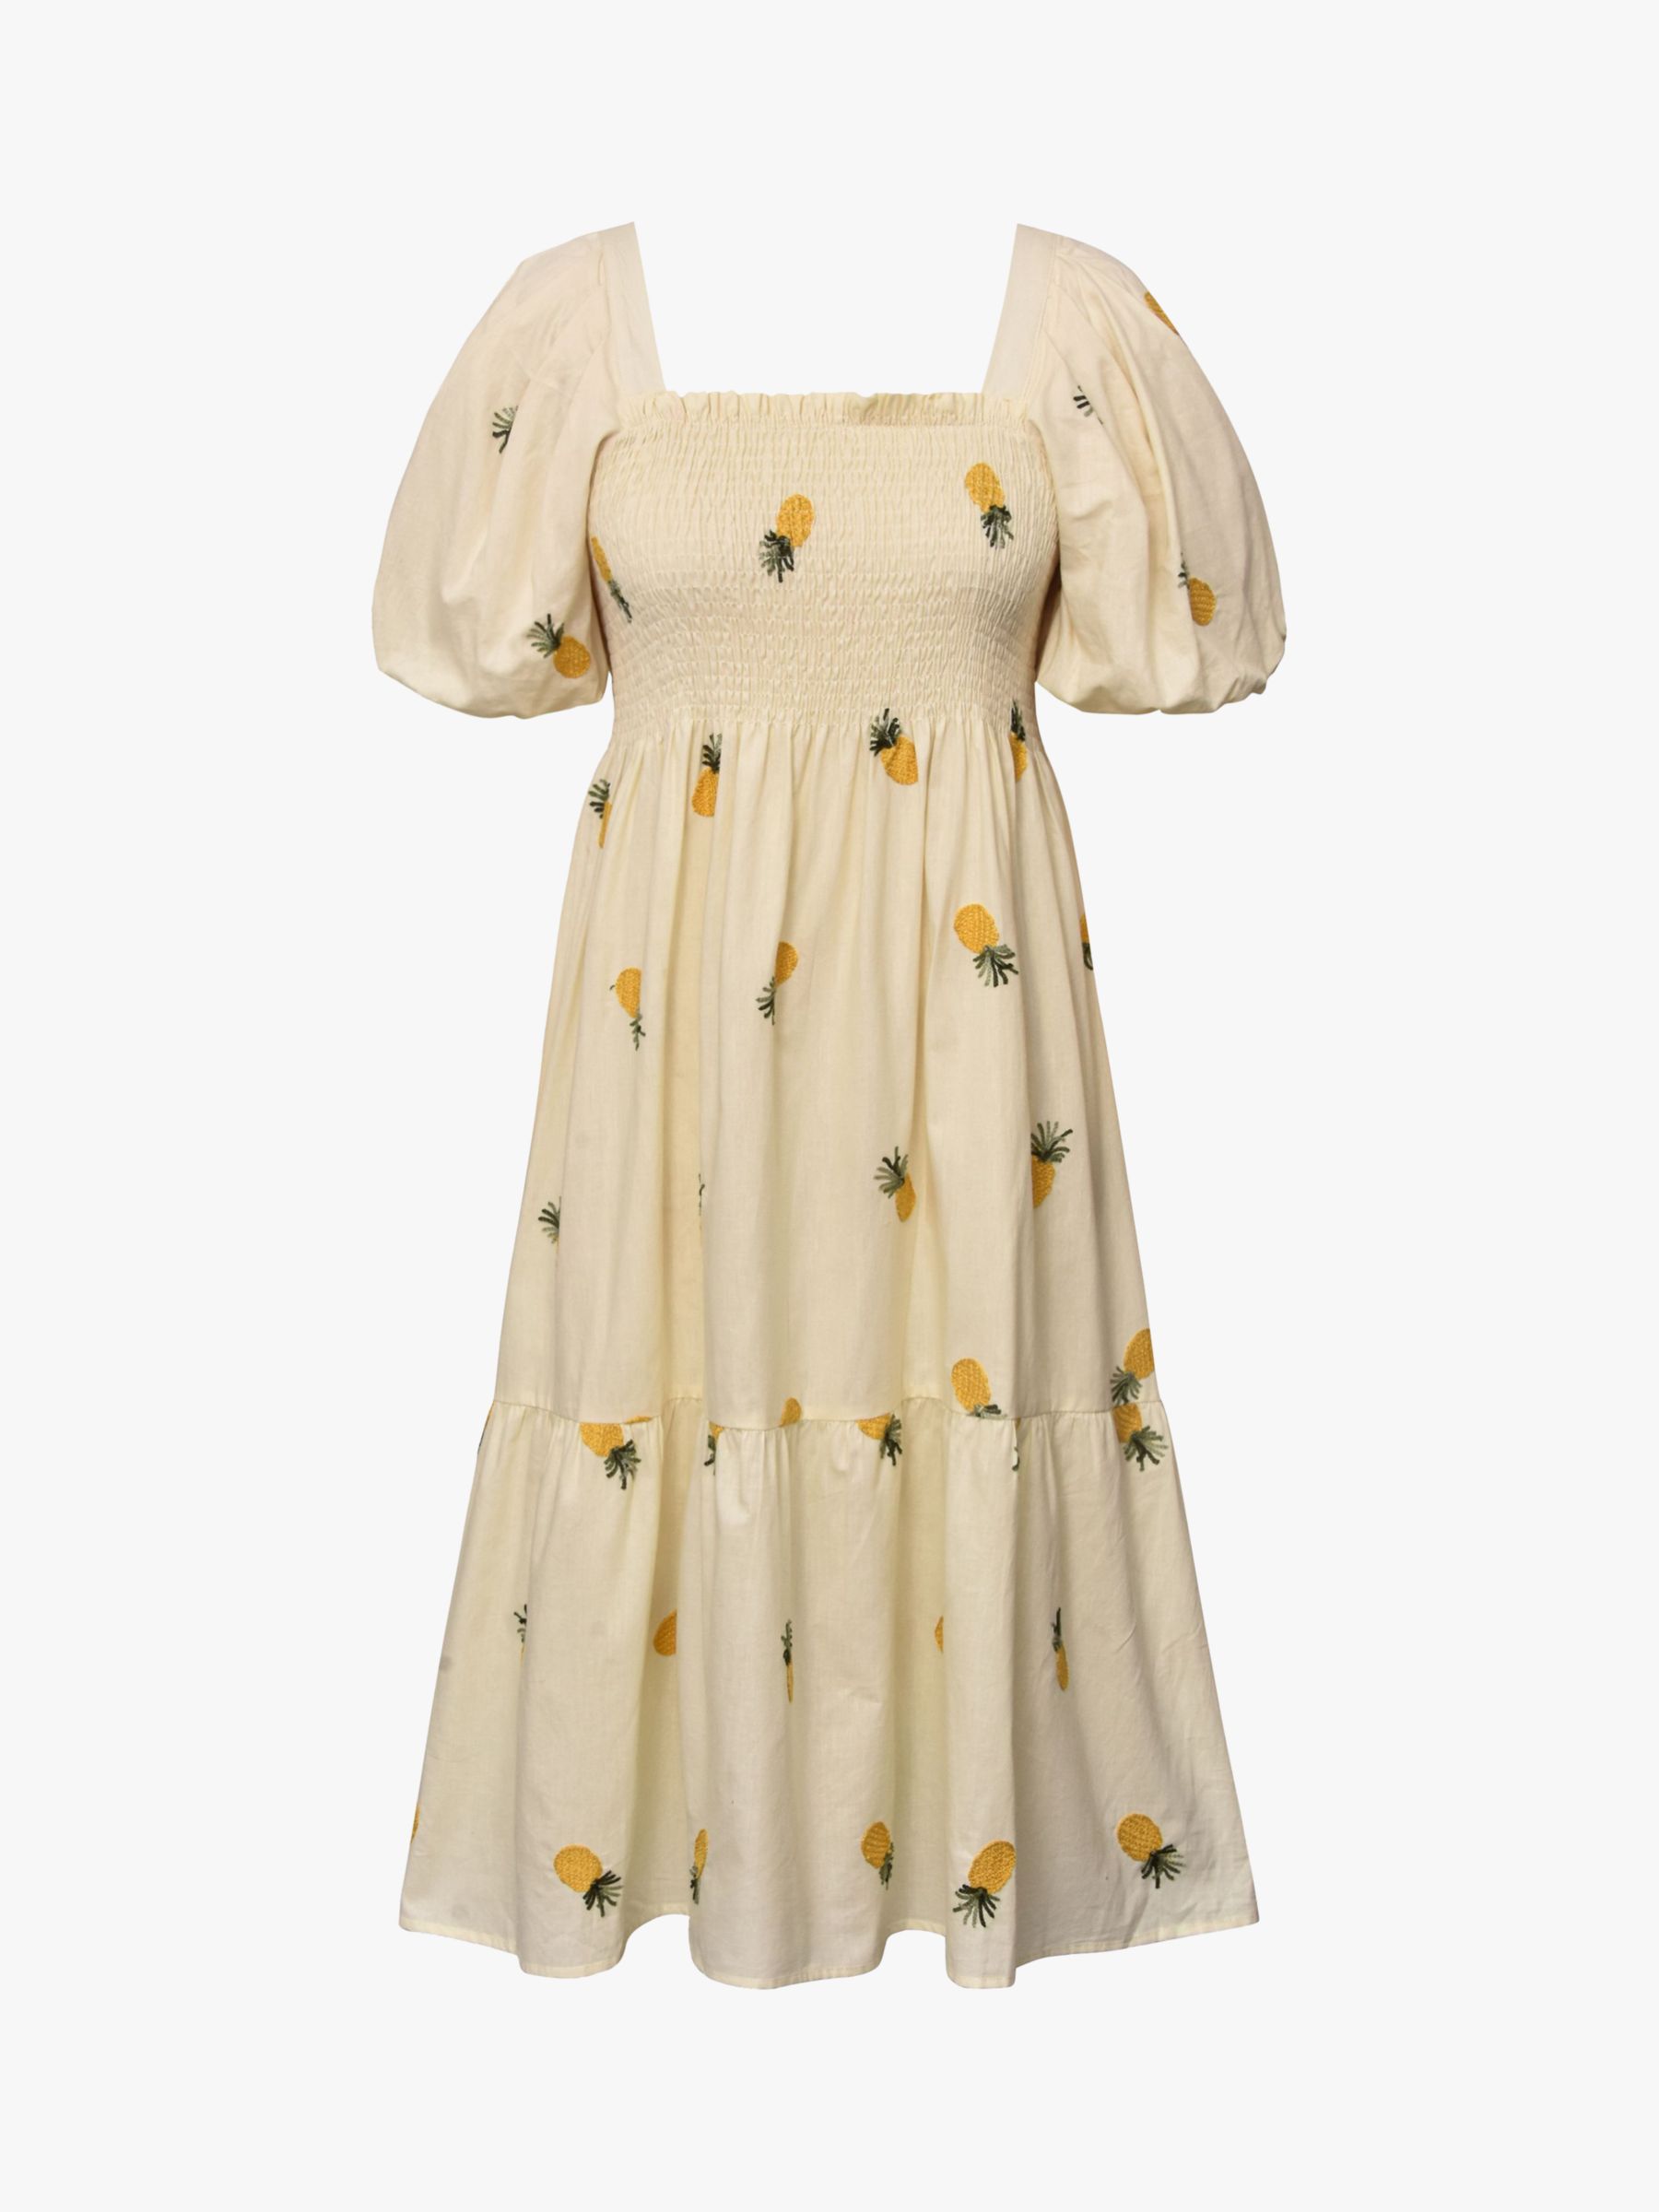 A-VIEW Cheri Pineapple Print Puff Sleeve Midi Cotton Dress, Sand/Yellow, 8